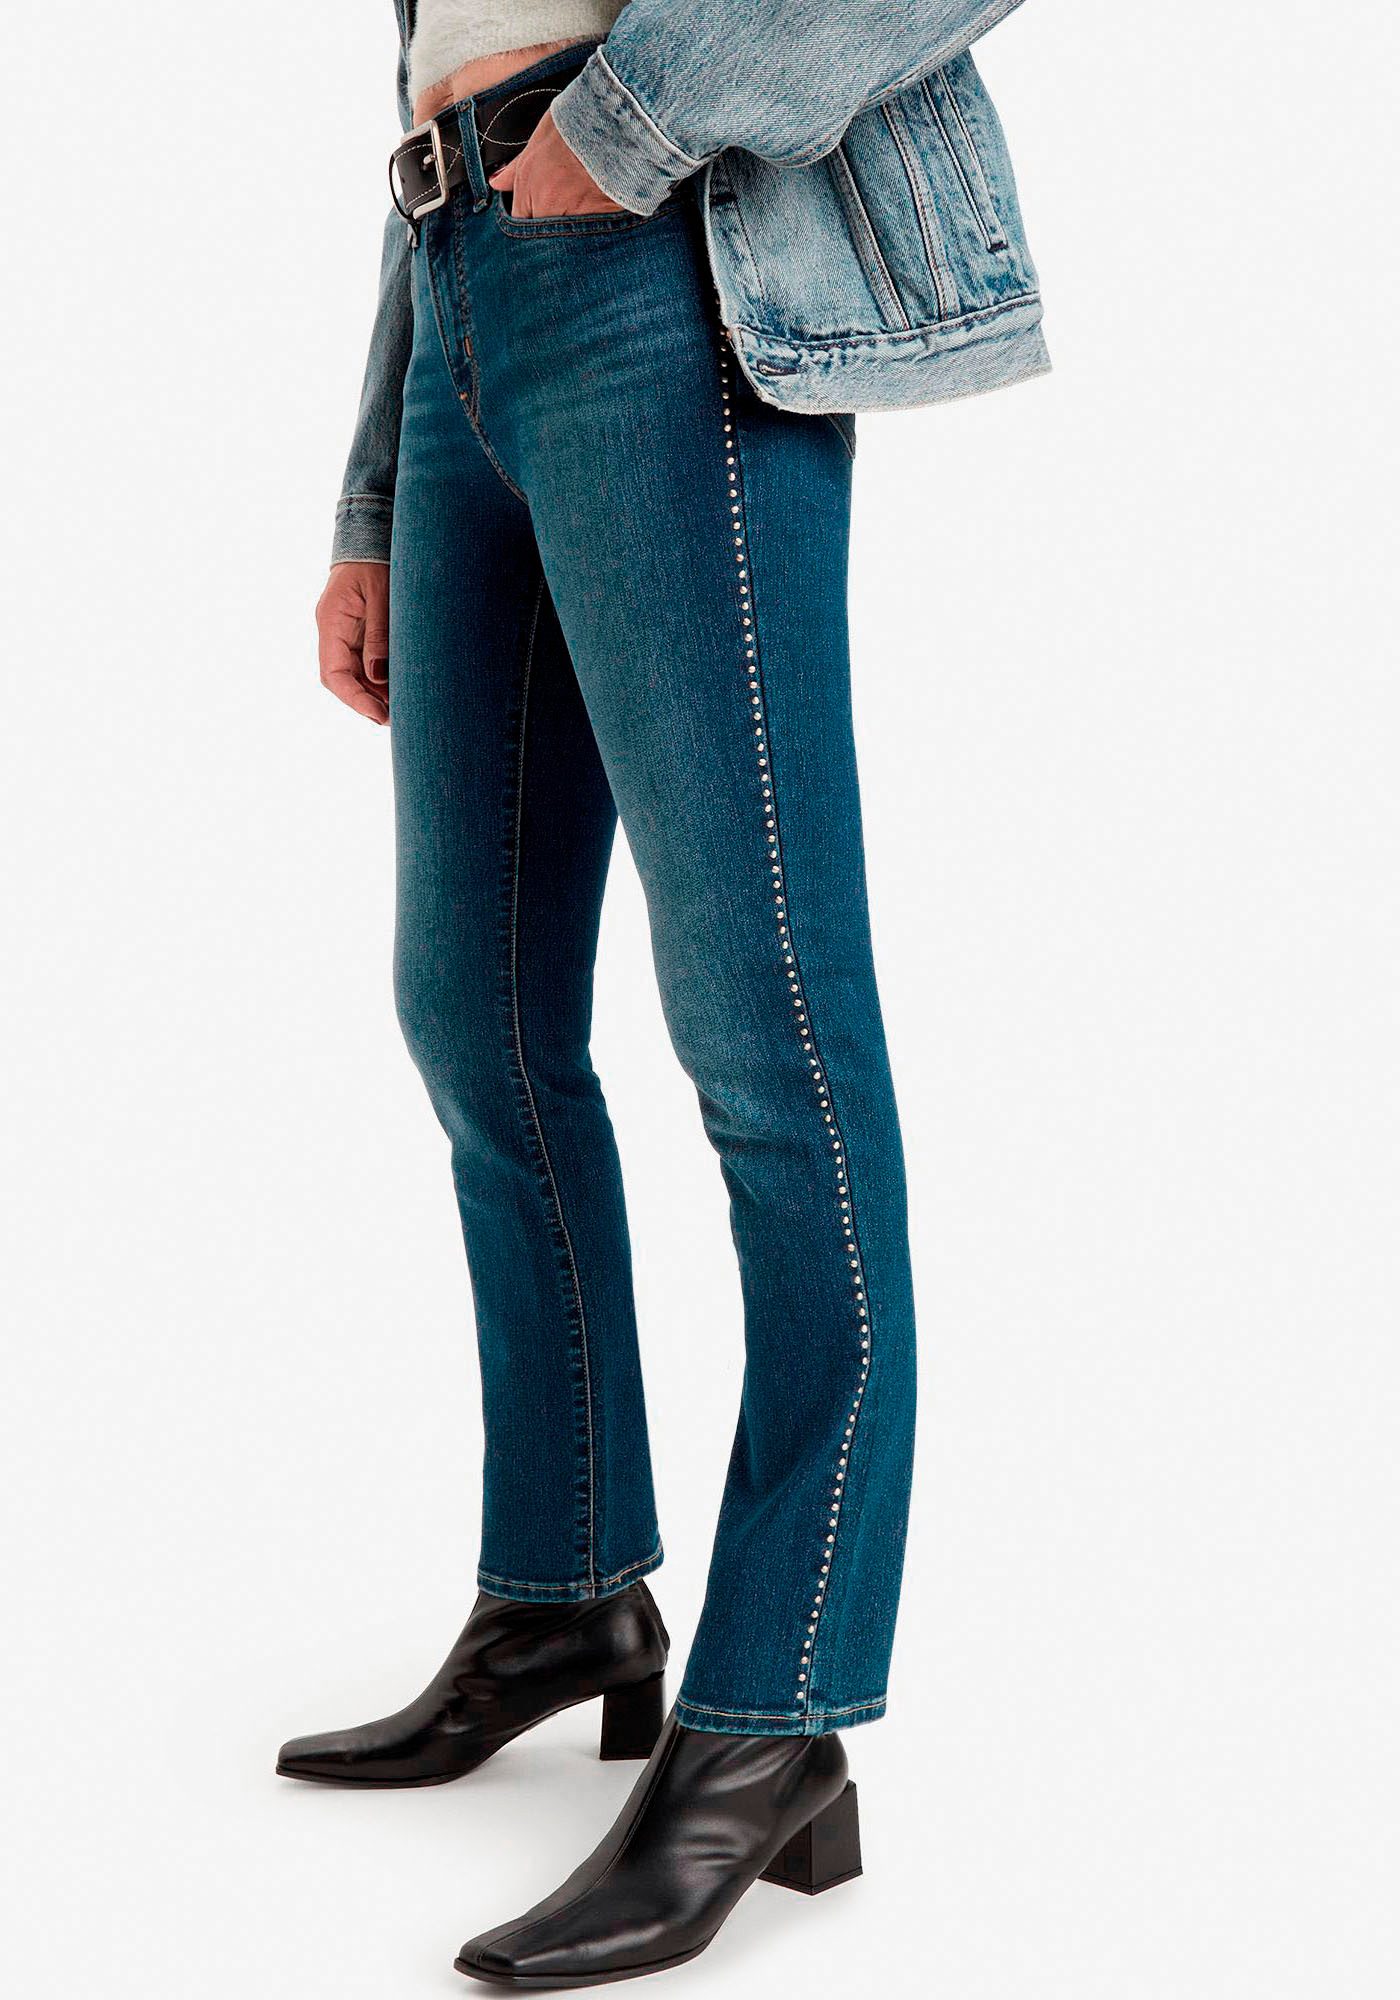 Levi's High-waist jeans 724 High Rise Straight